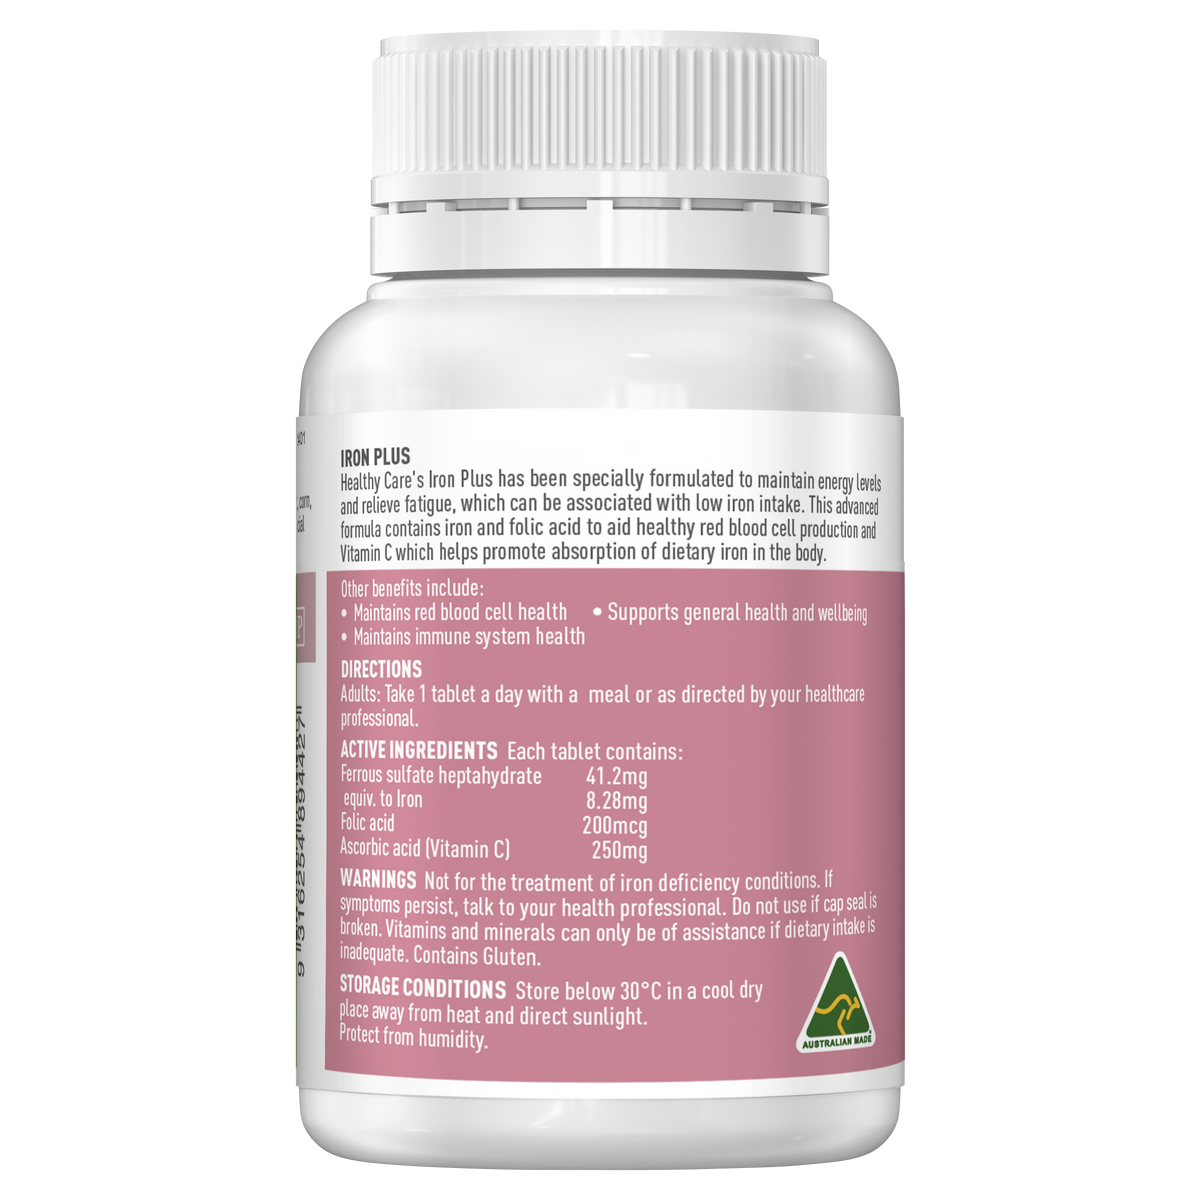 Healthy Care Iron Plus with Folic Acid & Vitamin C 80 tablets